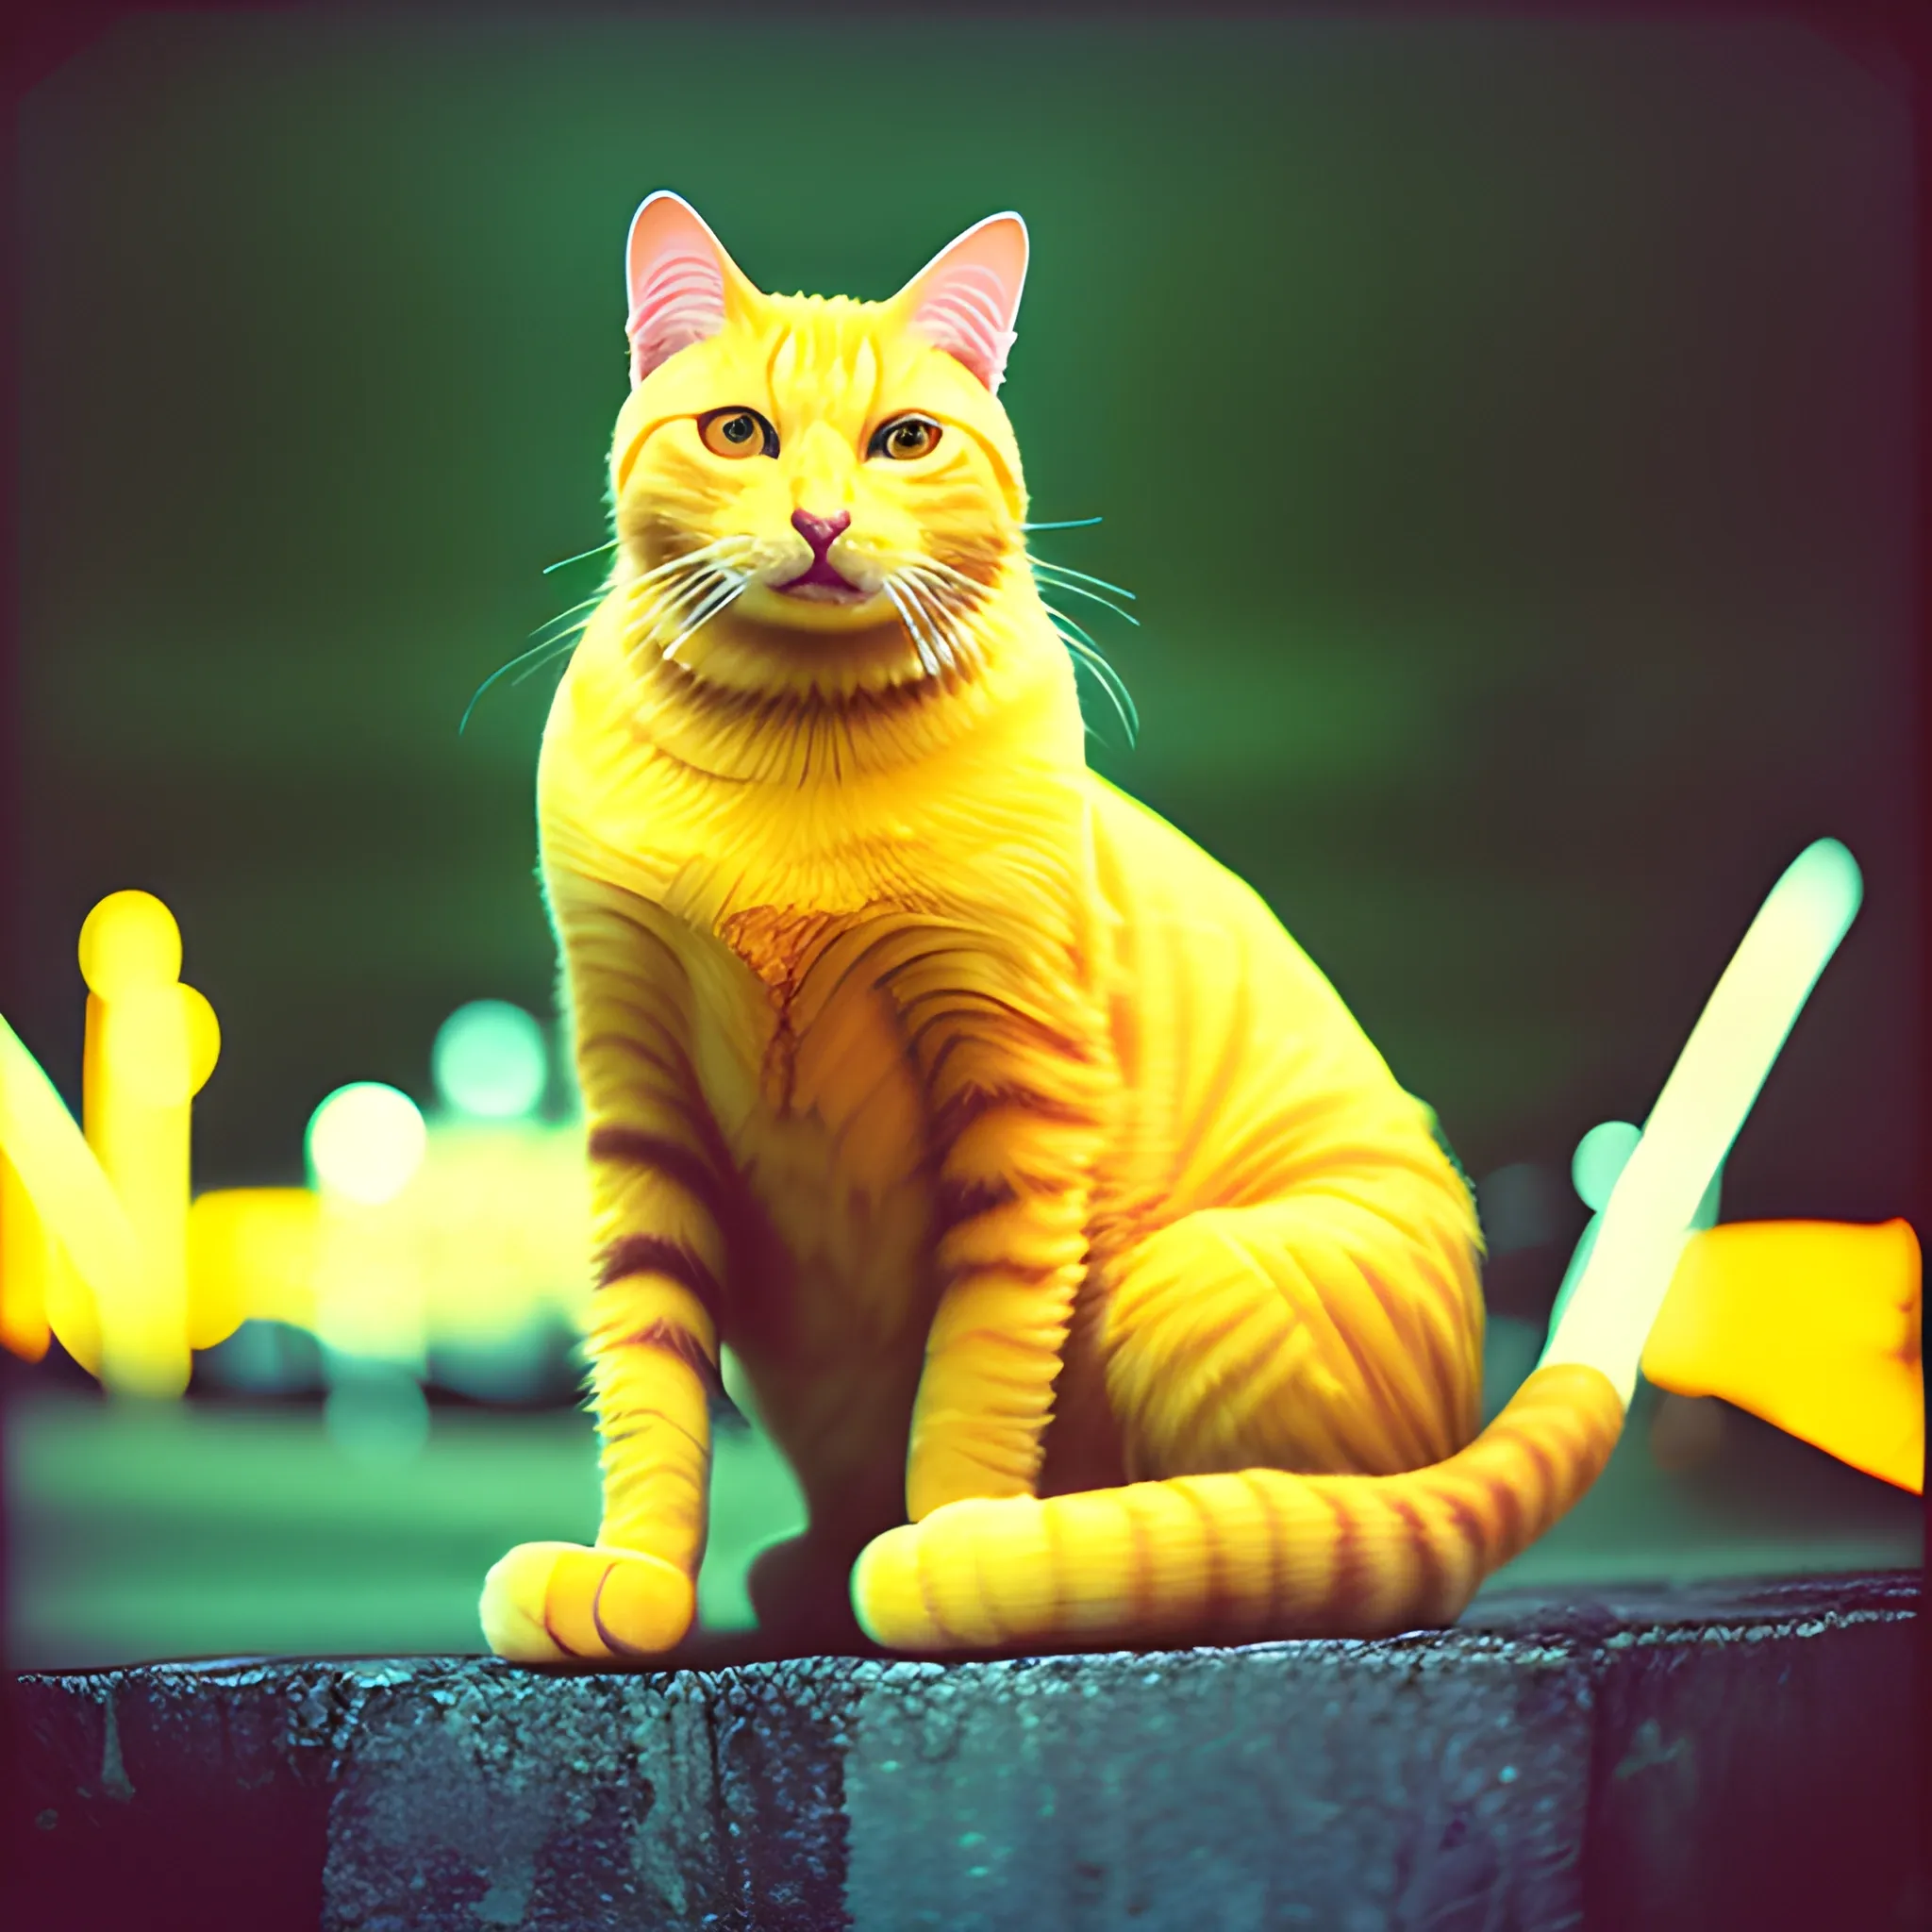 yellow cat king, epic art photography, film style canon ae-1, lightyellow